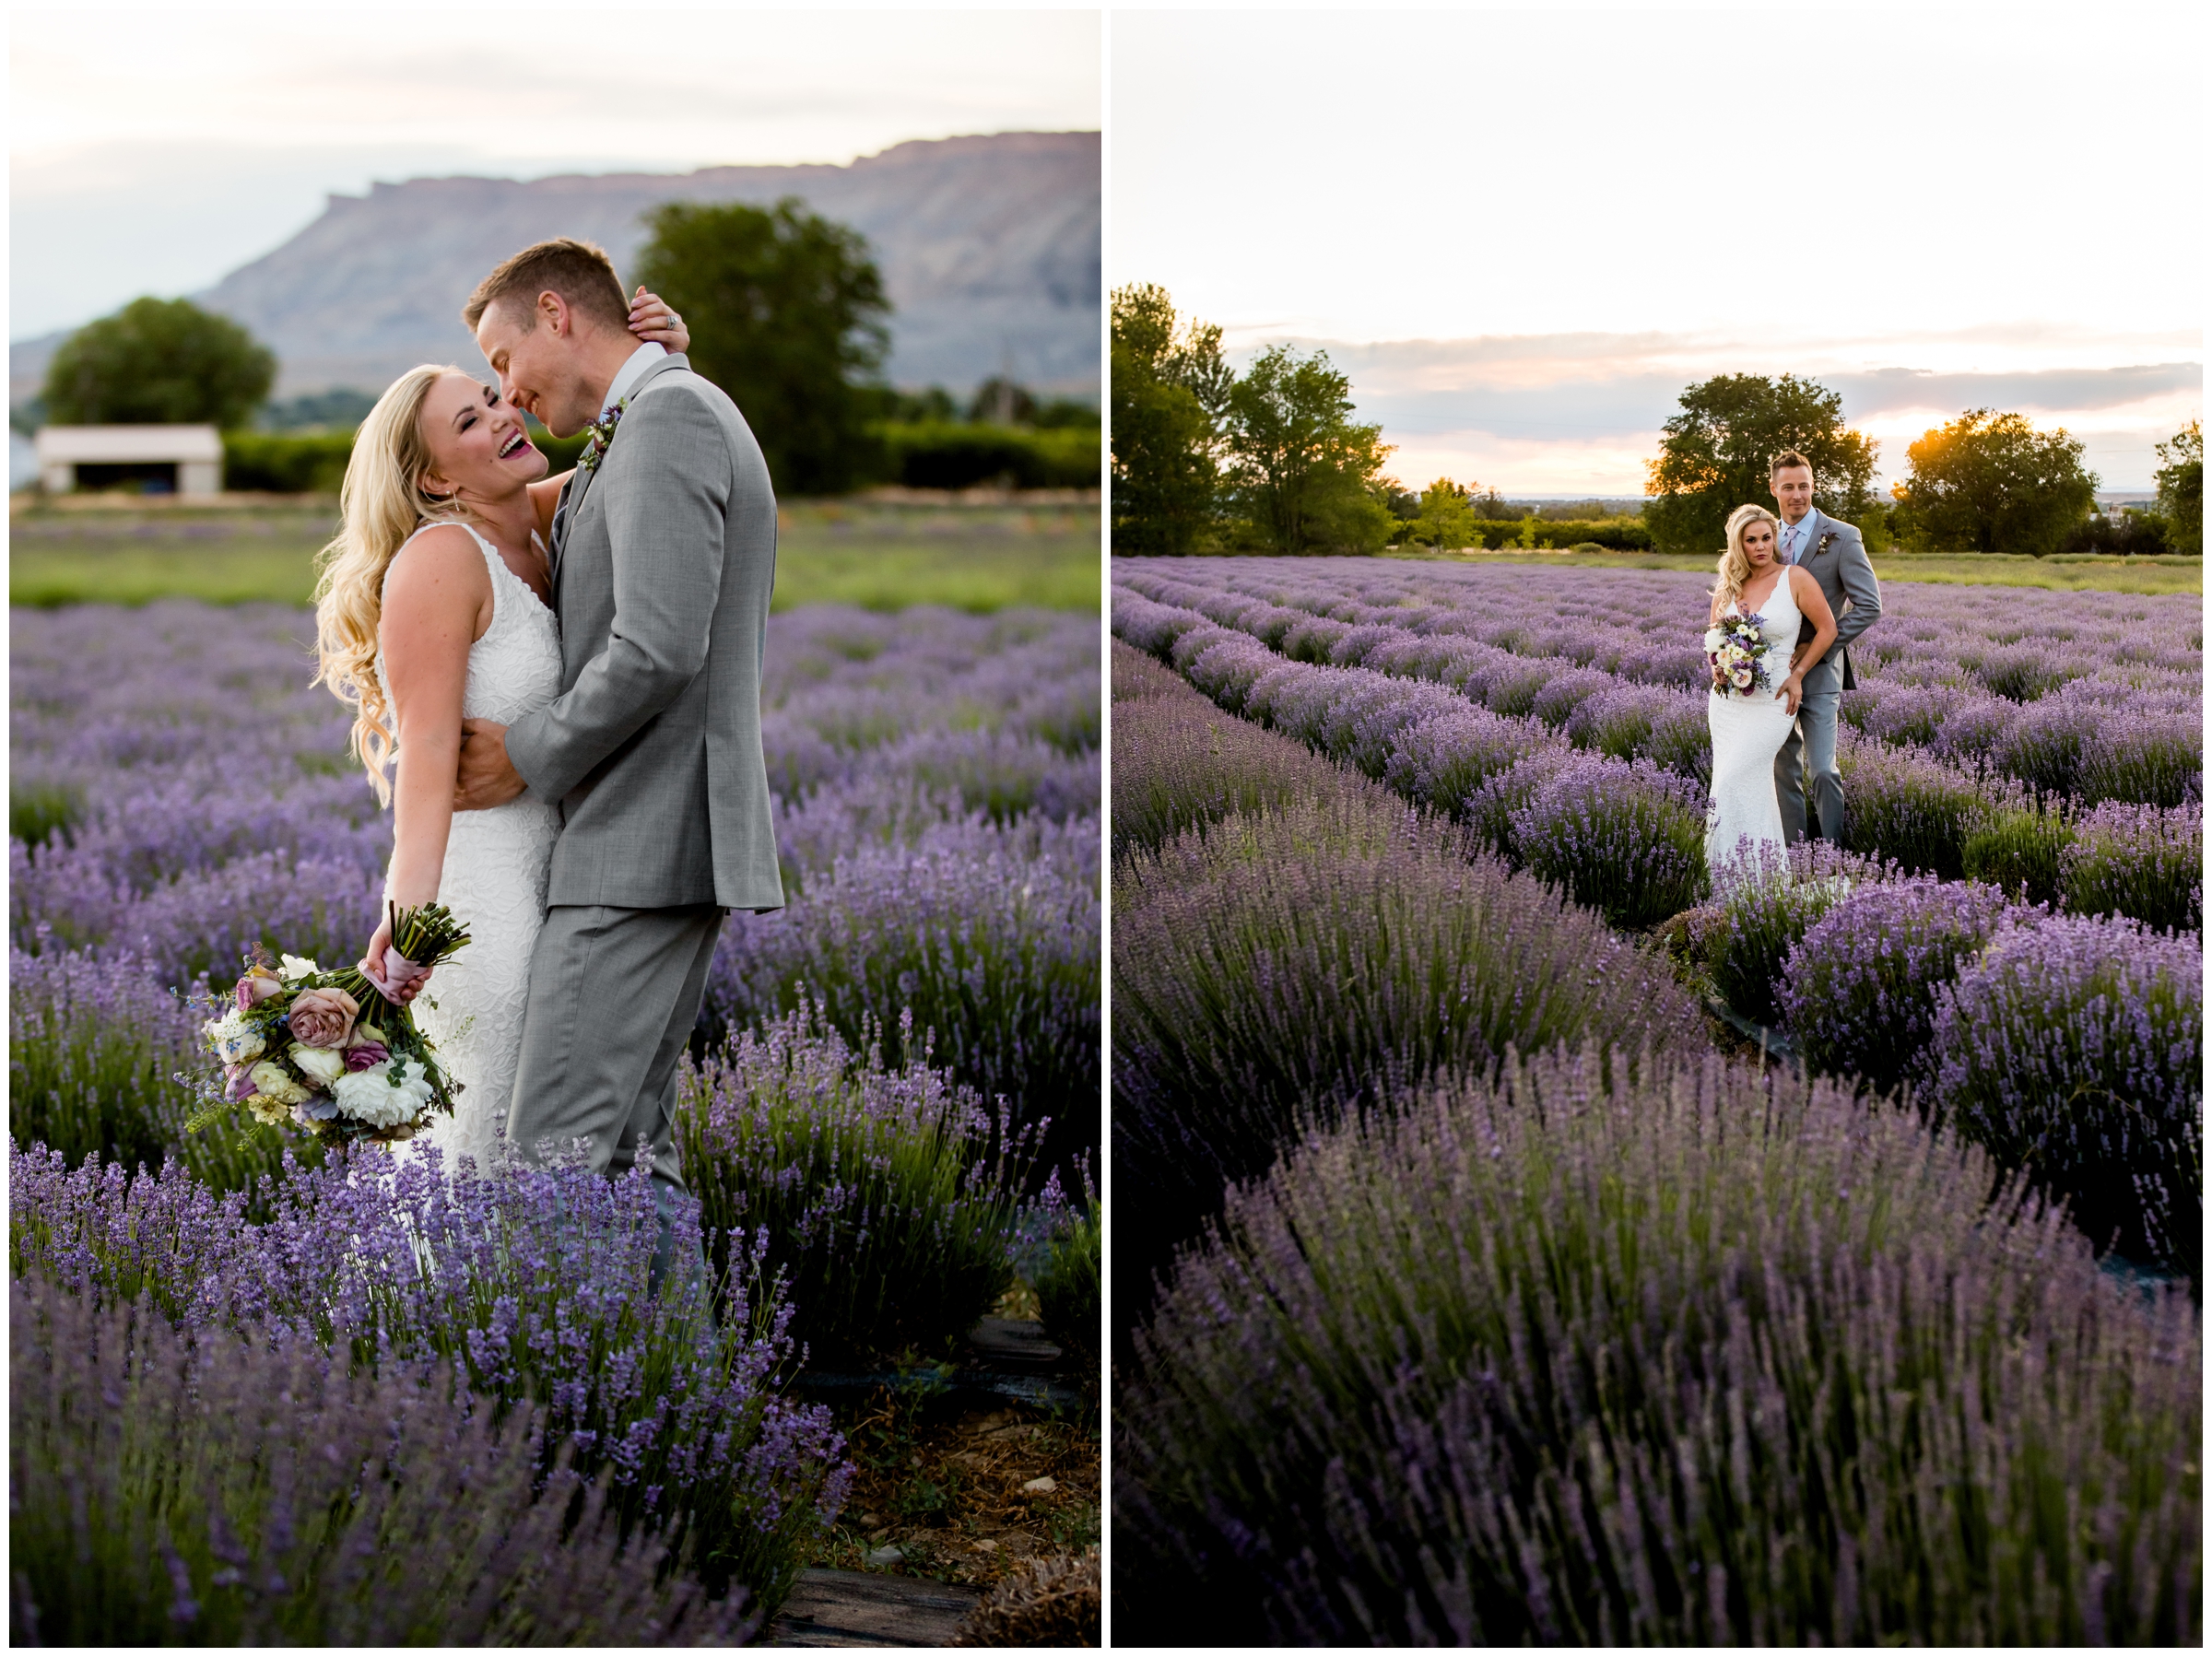 Grand Junction wedding photos at Sage Creations Organic Farm by Colorado photographer Plum Pretty Photography